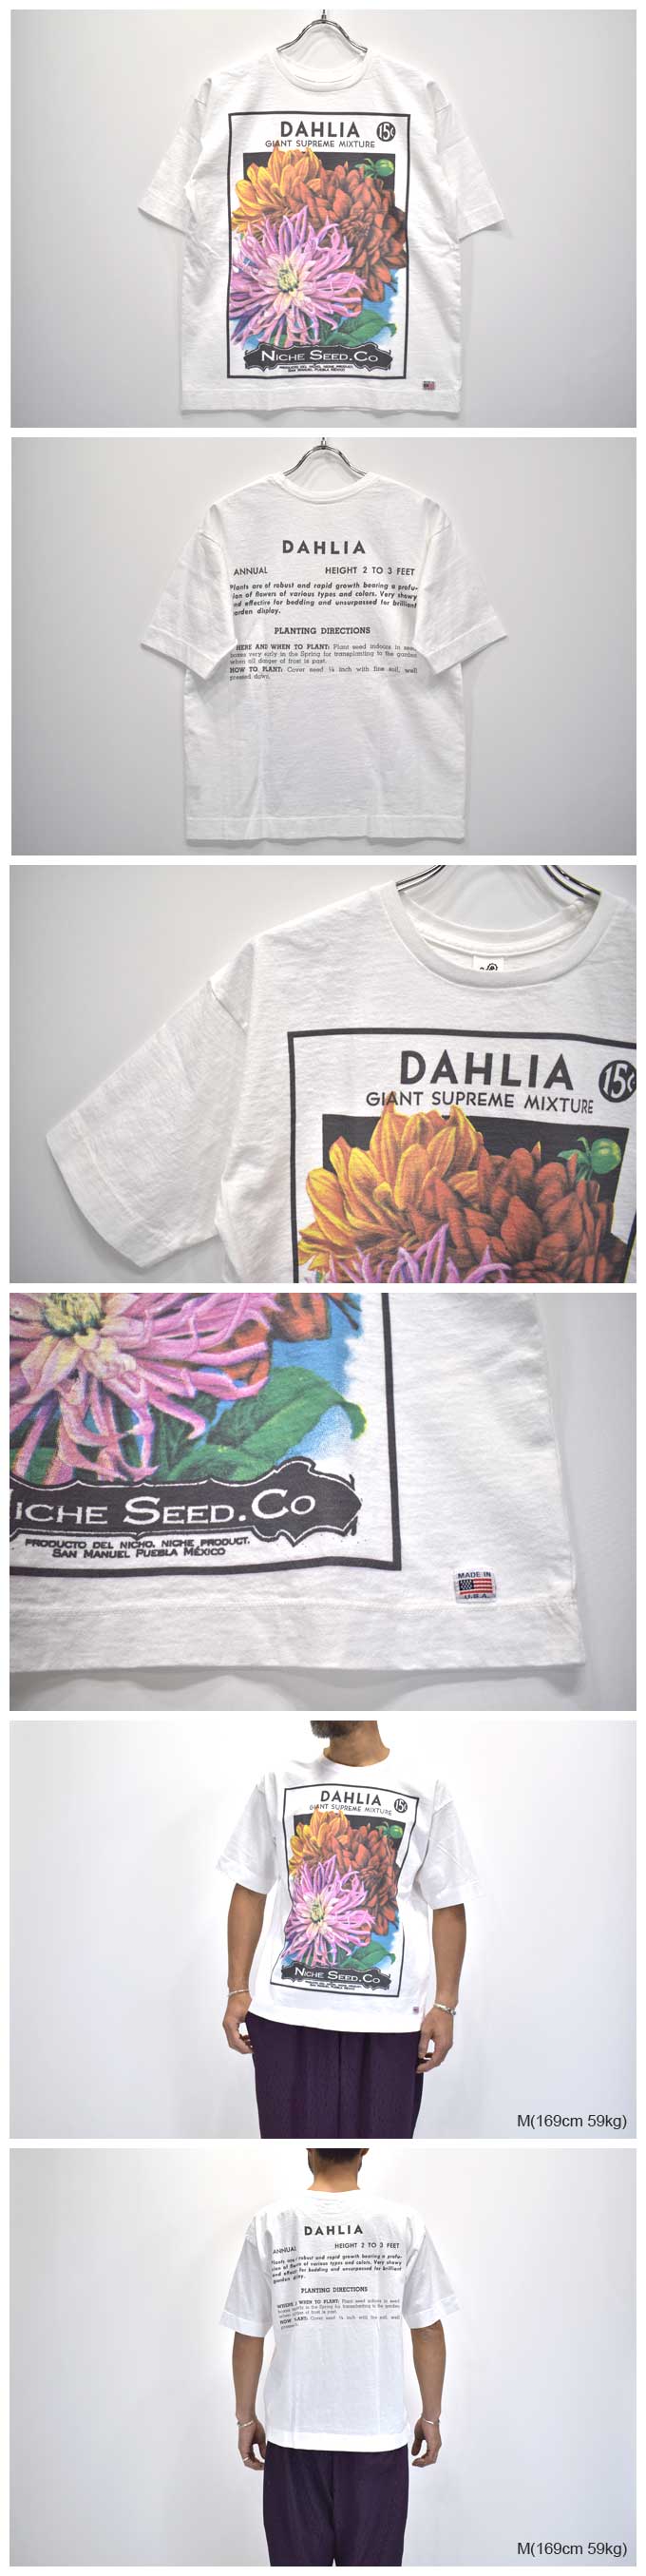 Niche (THIS TIME inc.) Flower Seeds T-Shirts(Dahlia) 